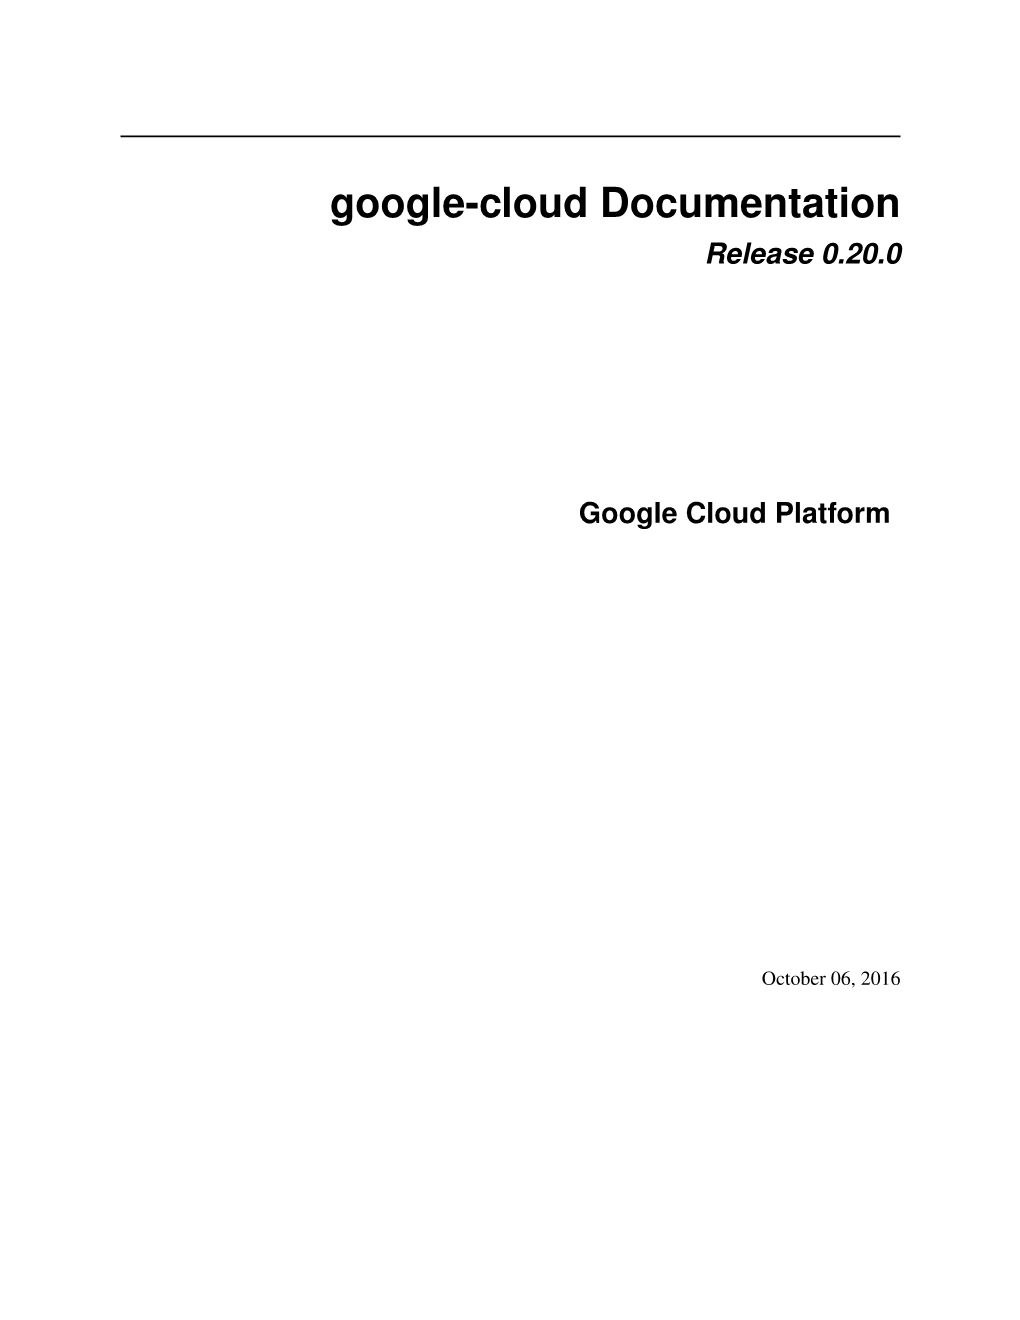 Google-Cloud Documentation Release 0.20.0